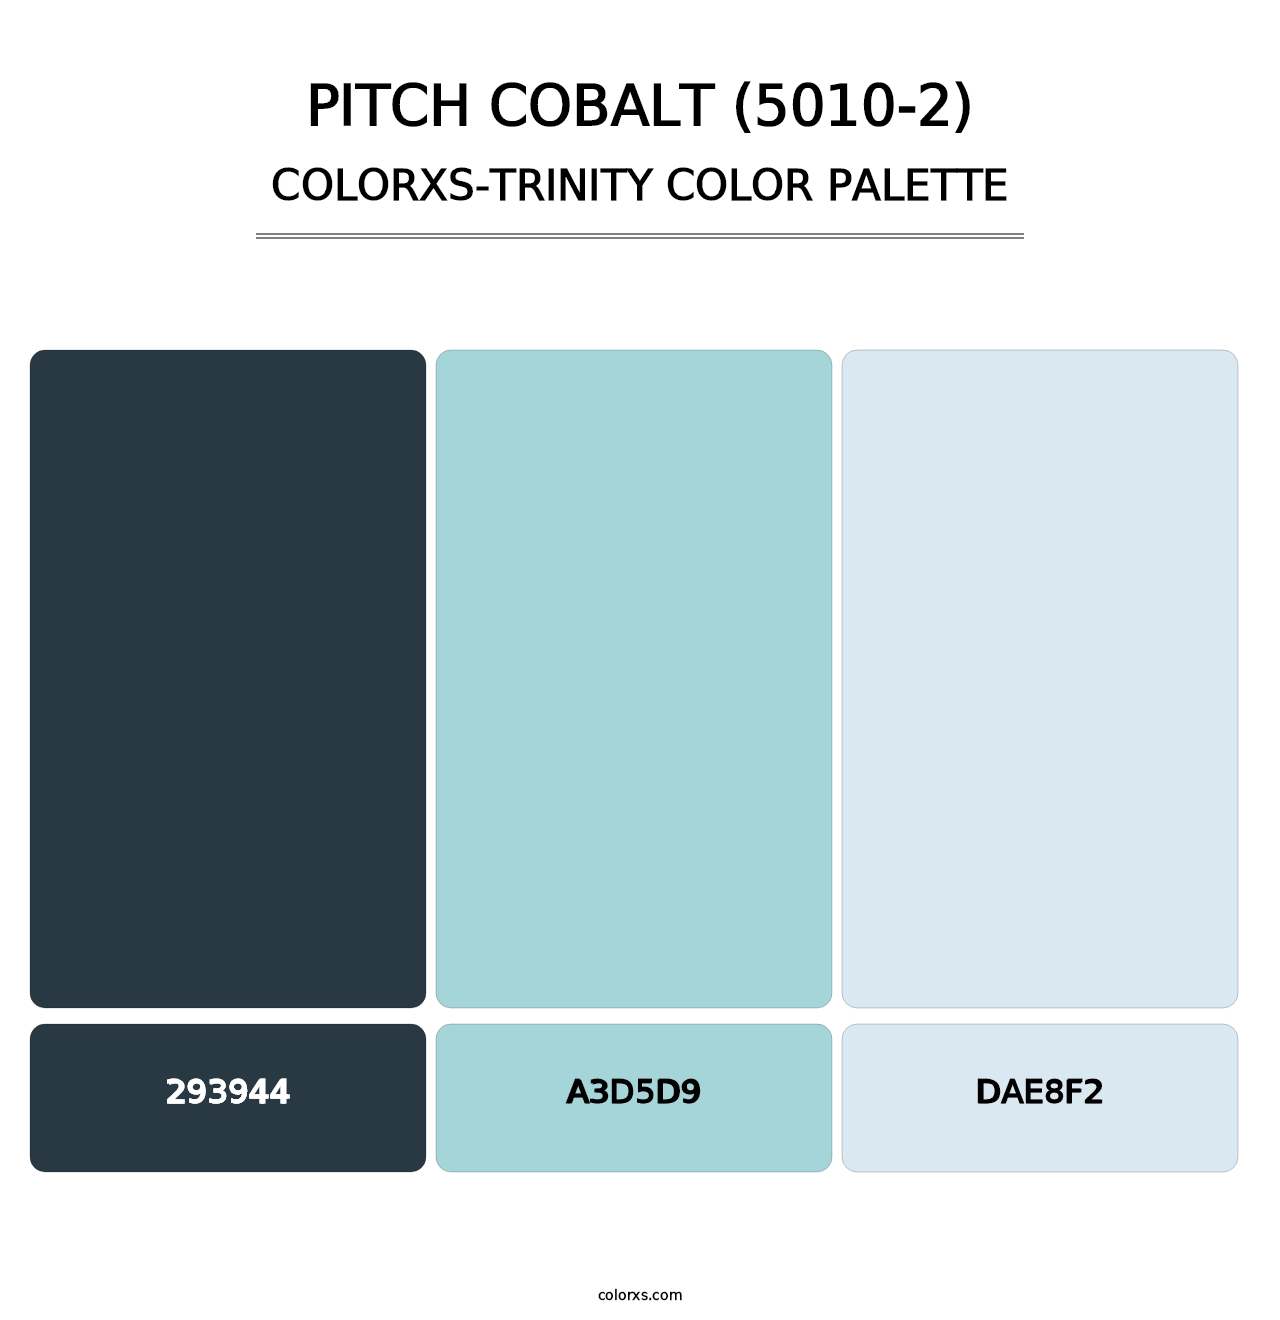 Pitch Cobalt (5010-2) - Colorxs Trinity Palette